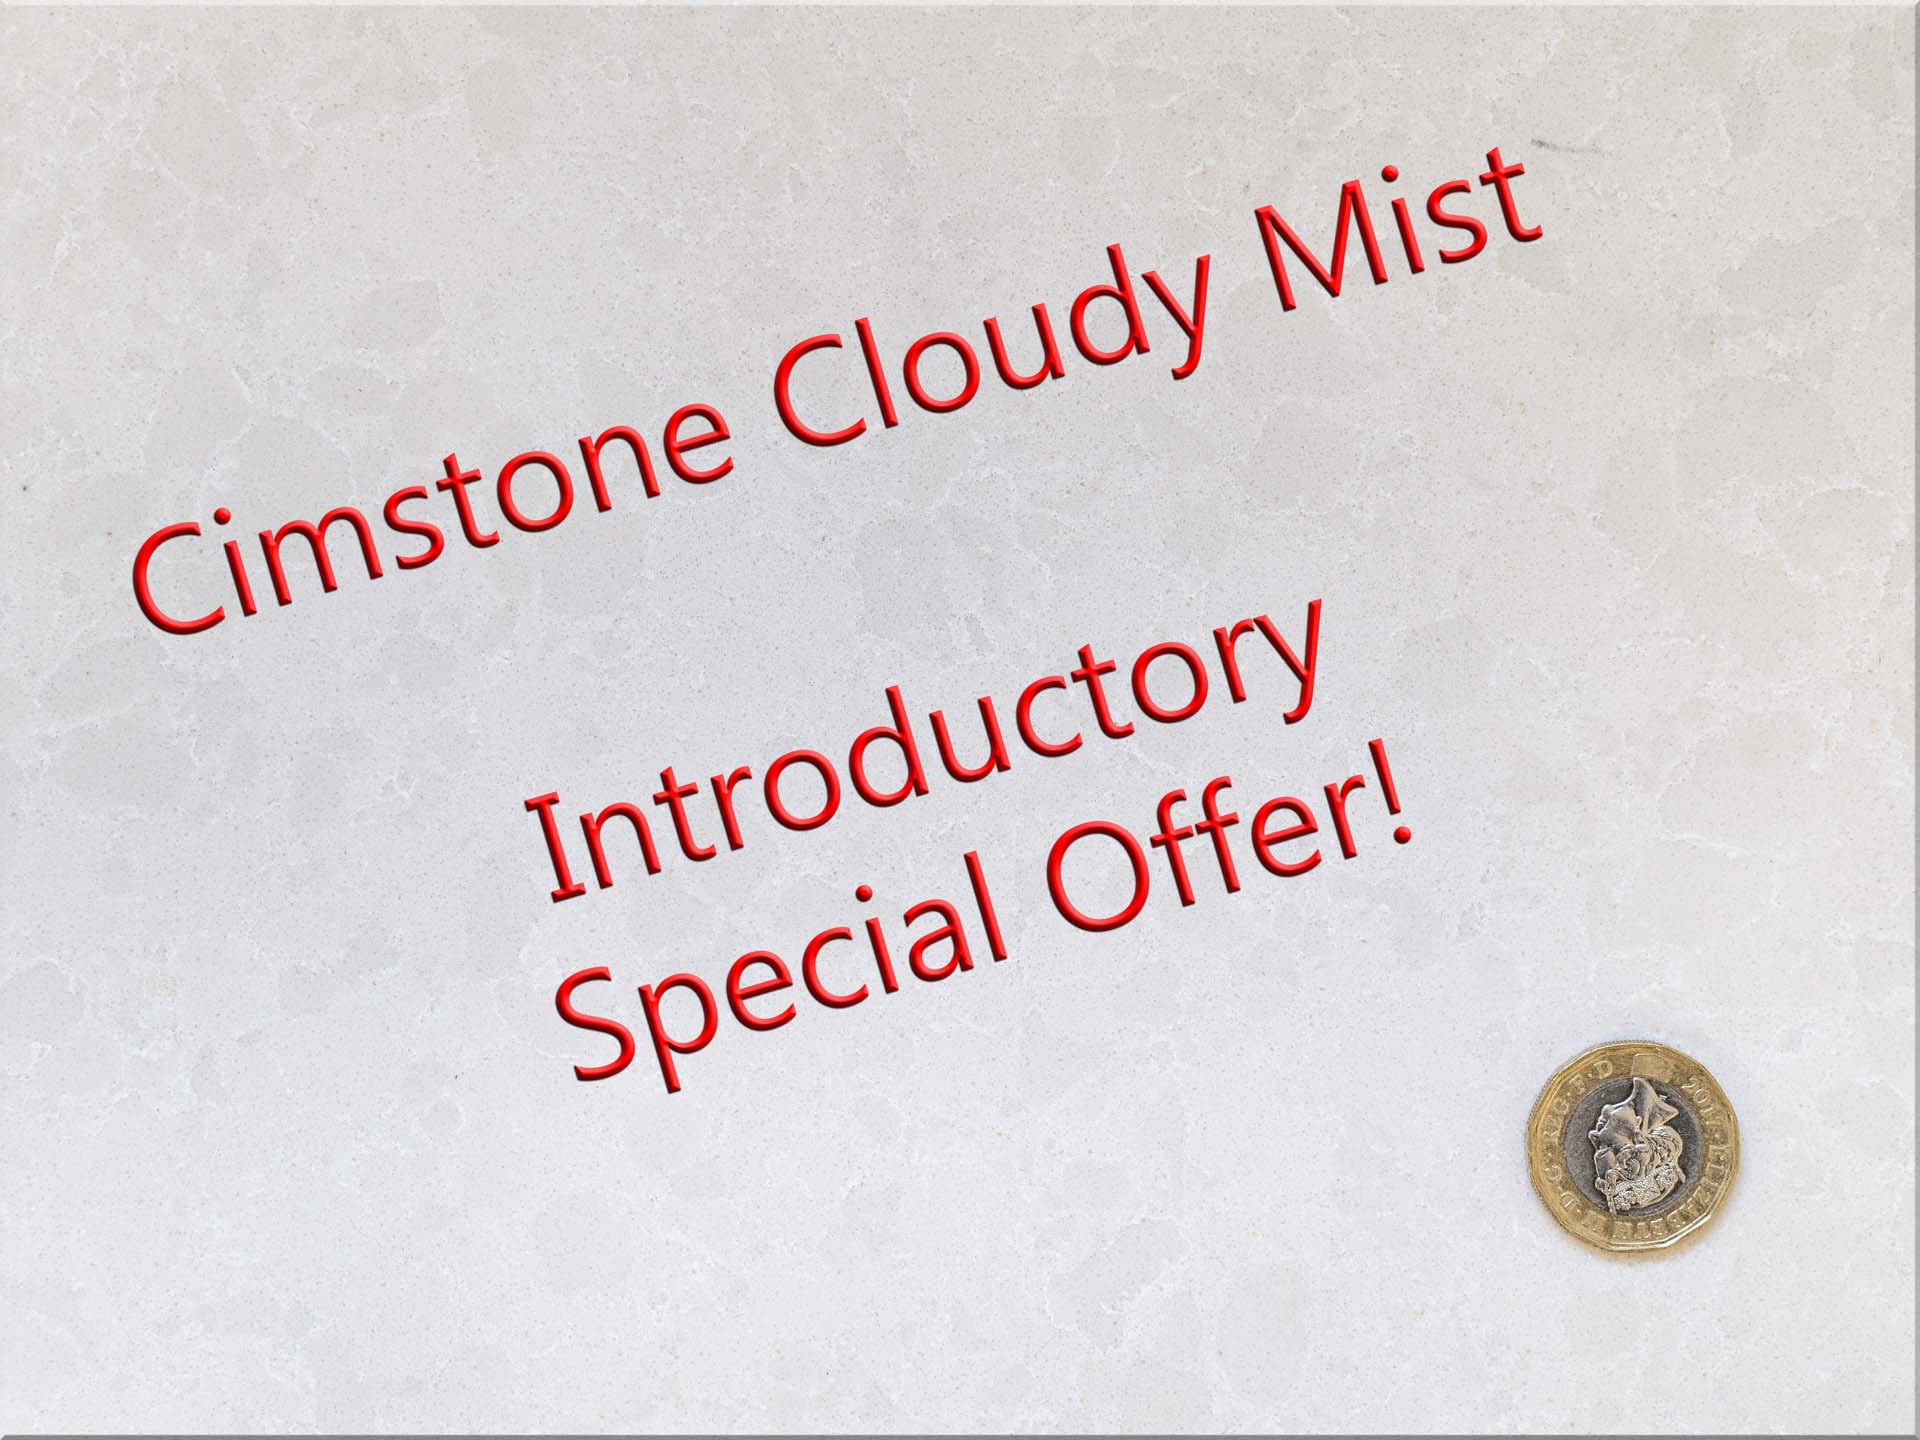 cimstone cloudy mist quartz worktops special offer